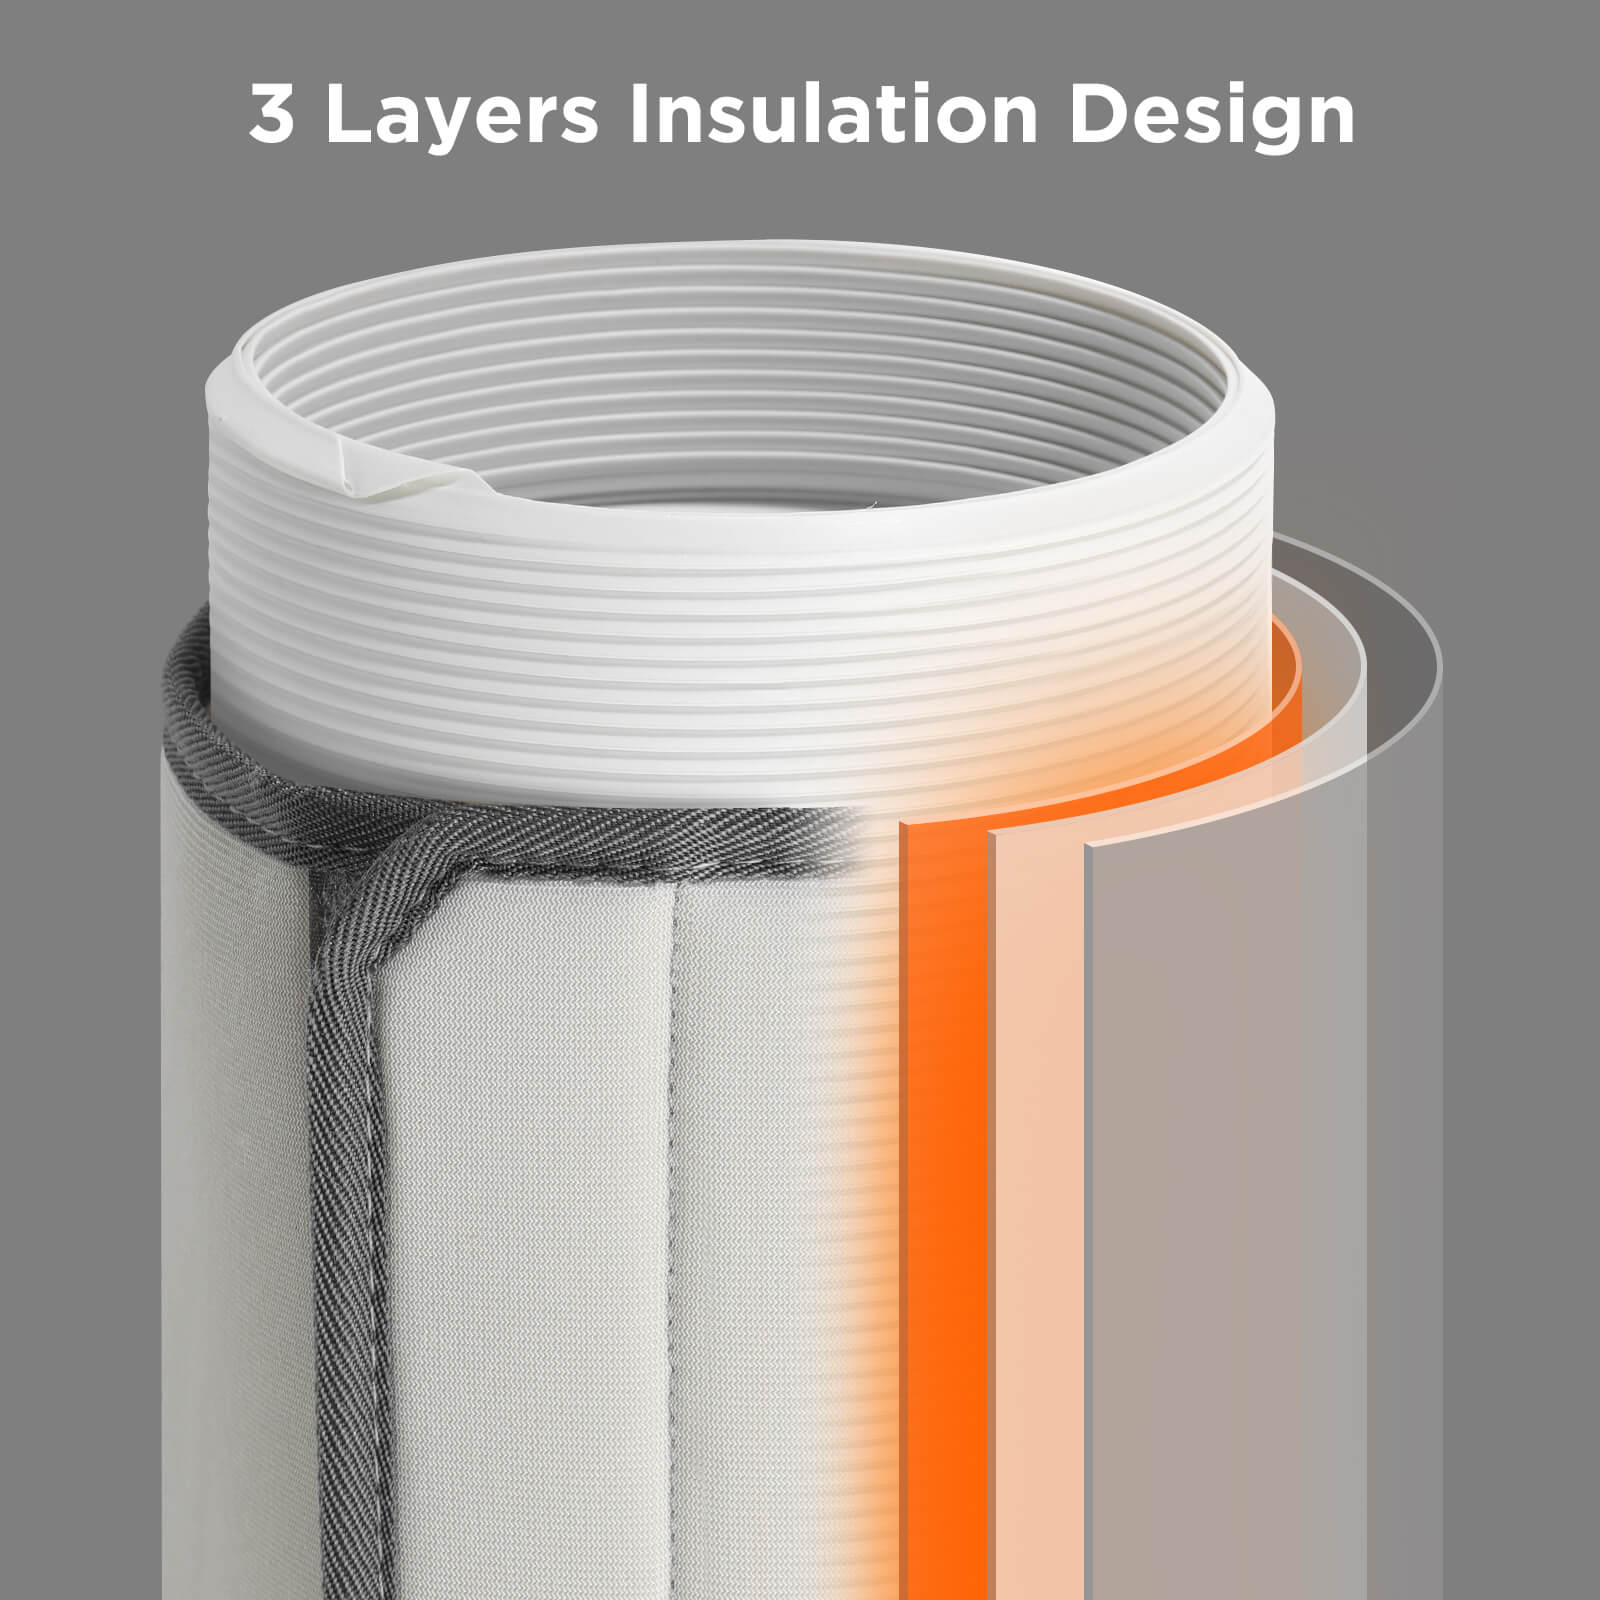 TURBRO Insulated Hose Cover for Portable AC, Fits For 5" & 5.9" Diameter Exhaust Hoses